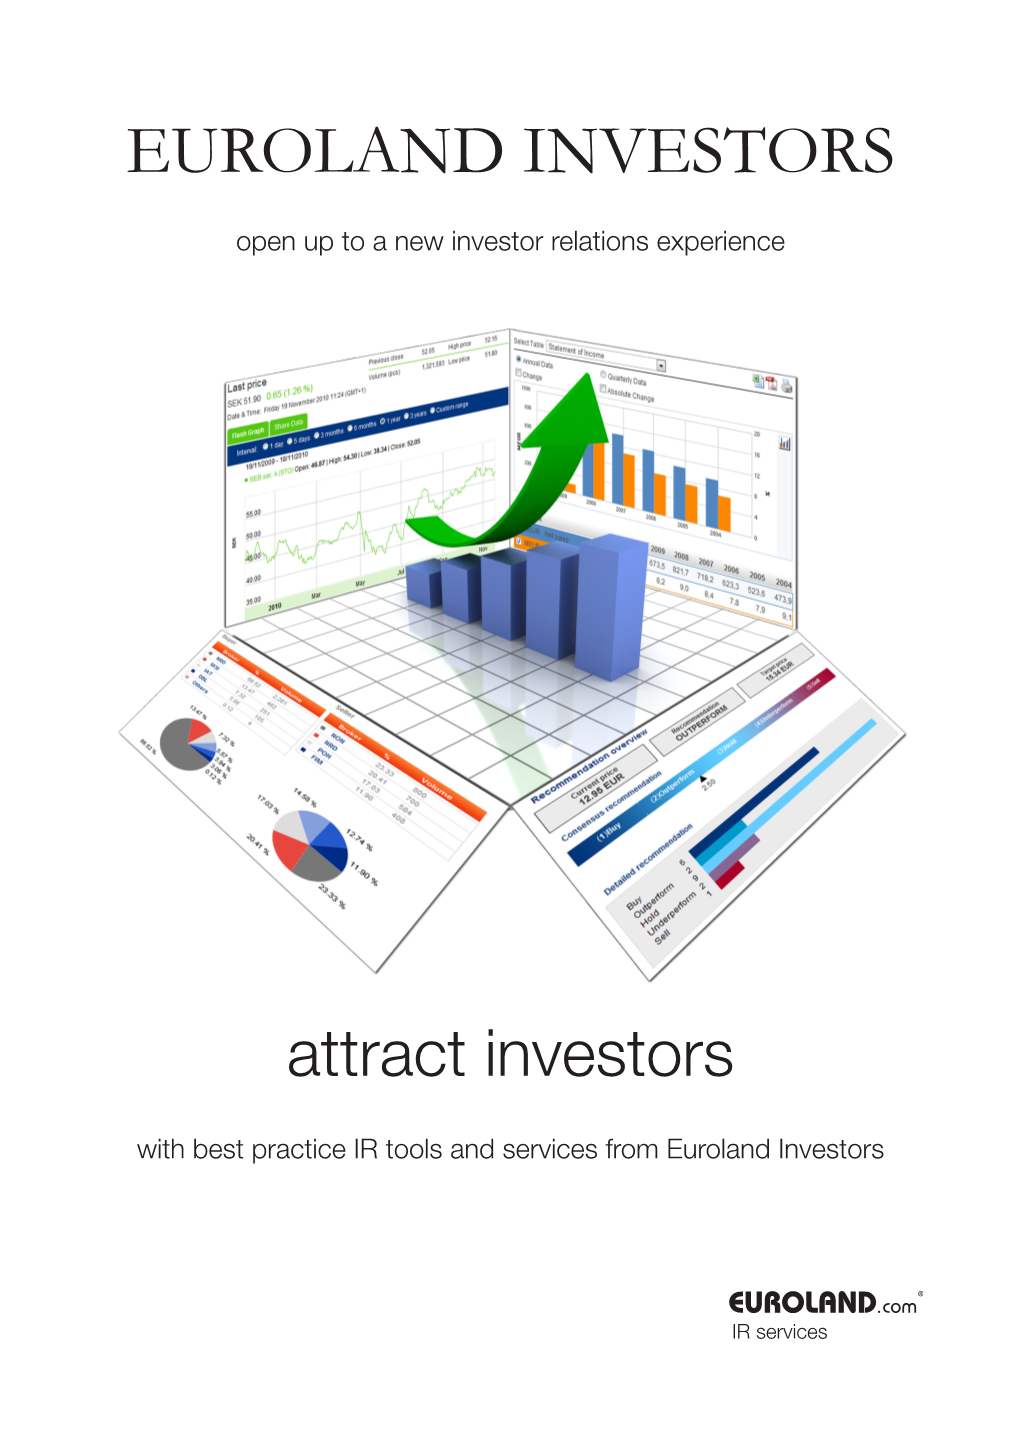 Euroland Investors